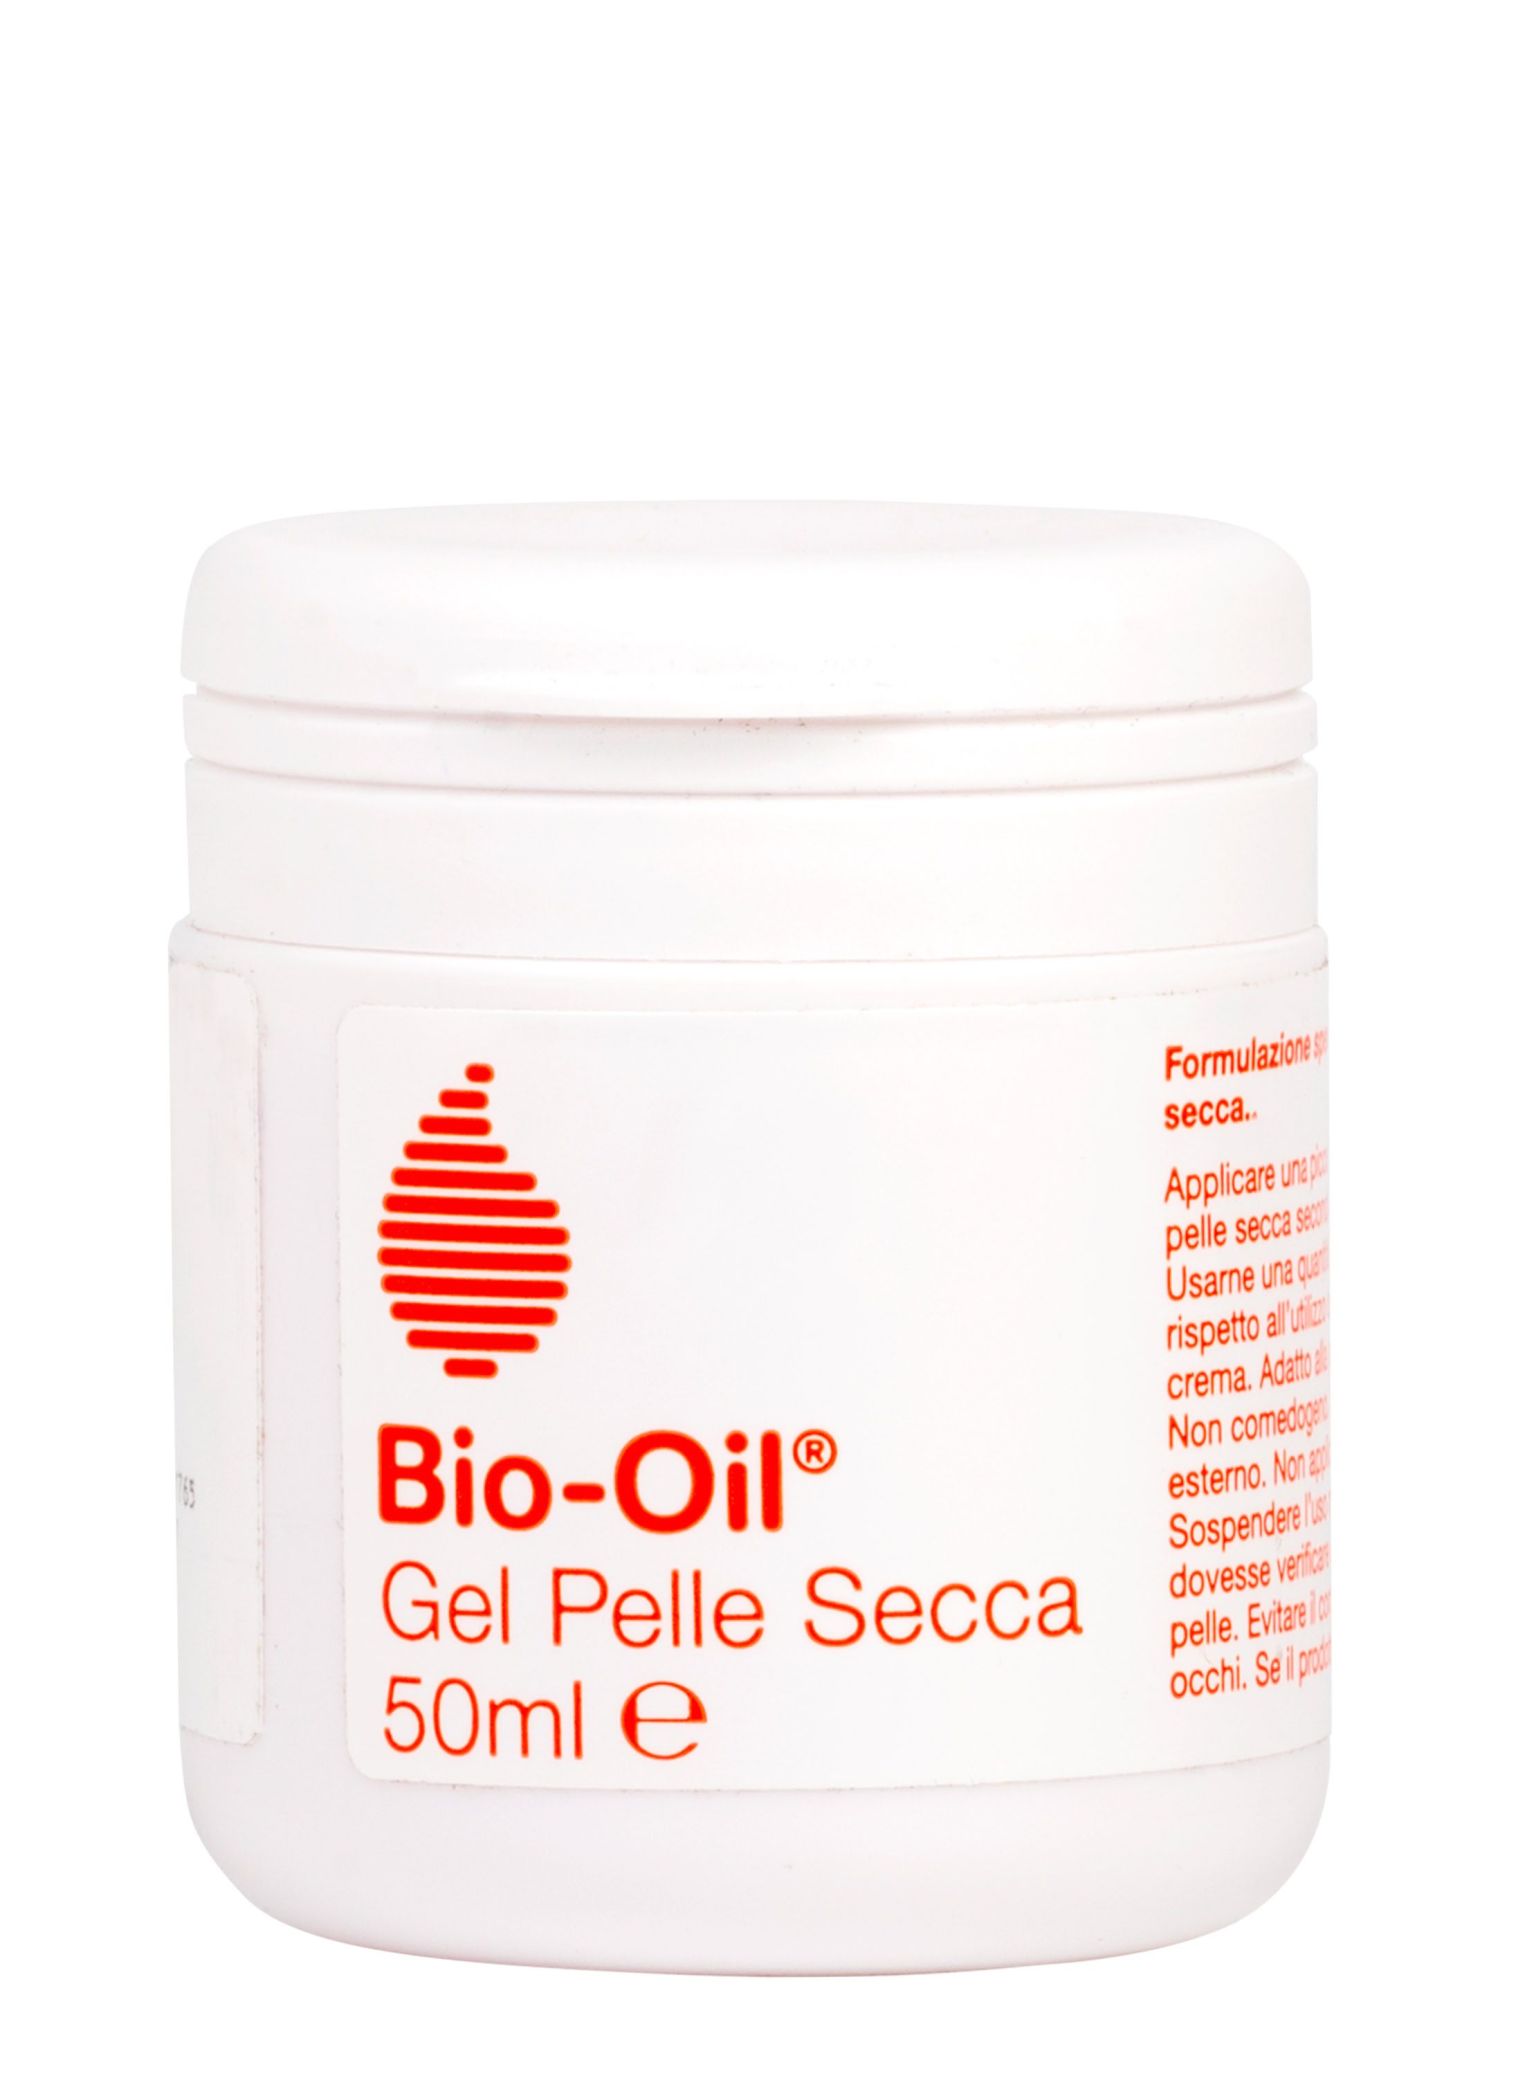 975431988 - Bio-Oil Gel Pelle Secca 50ml - 7892652_2.jpg